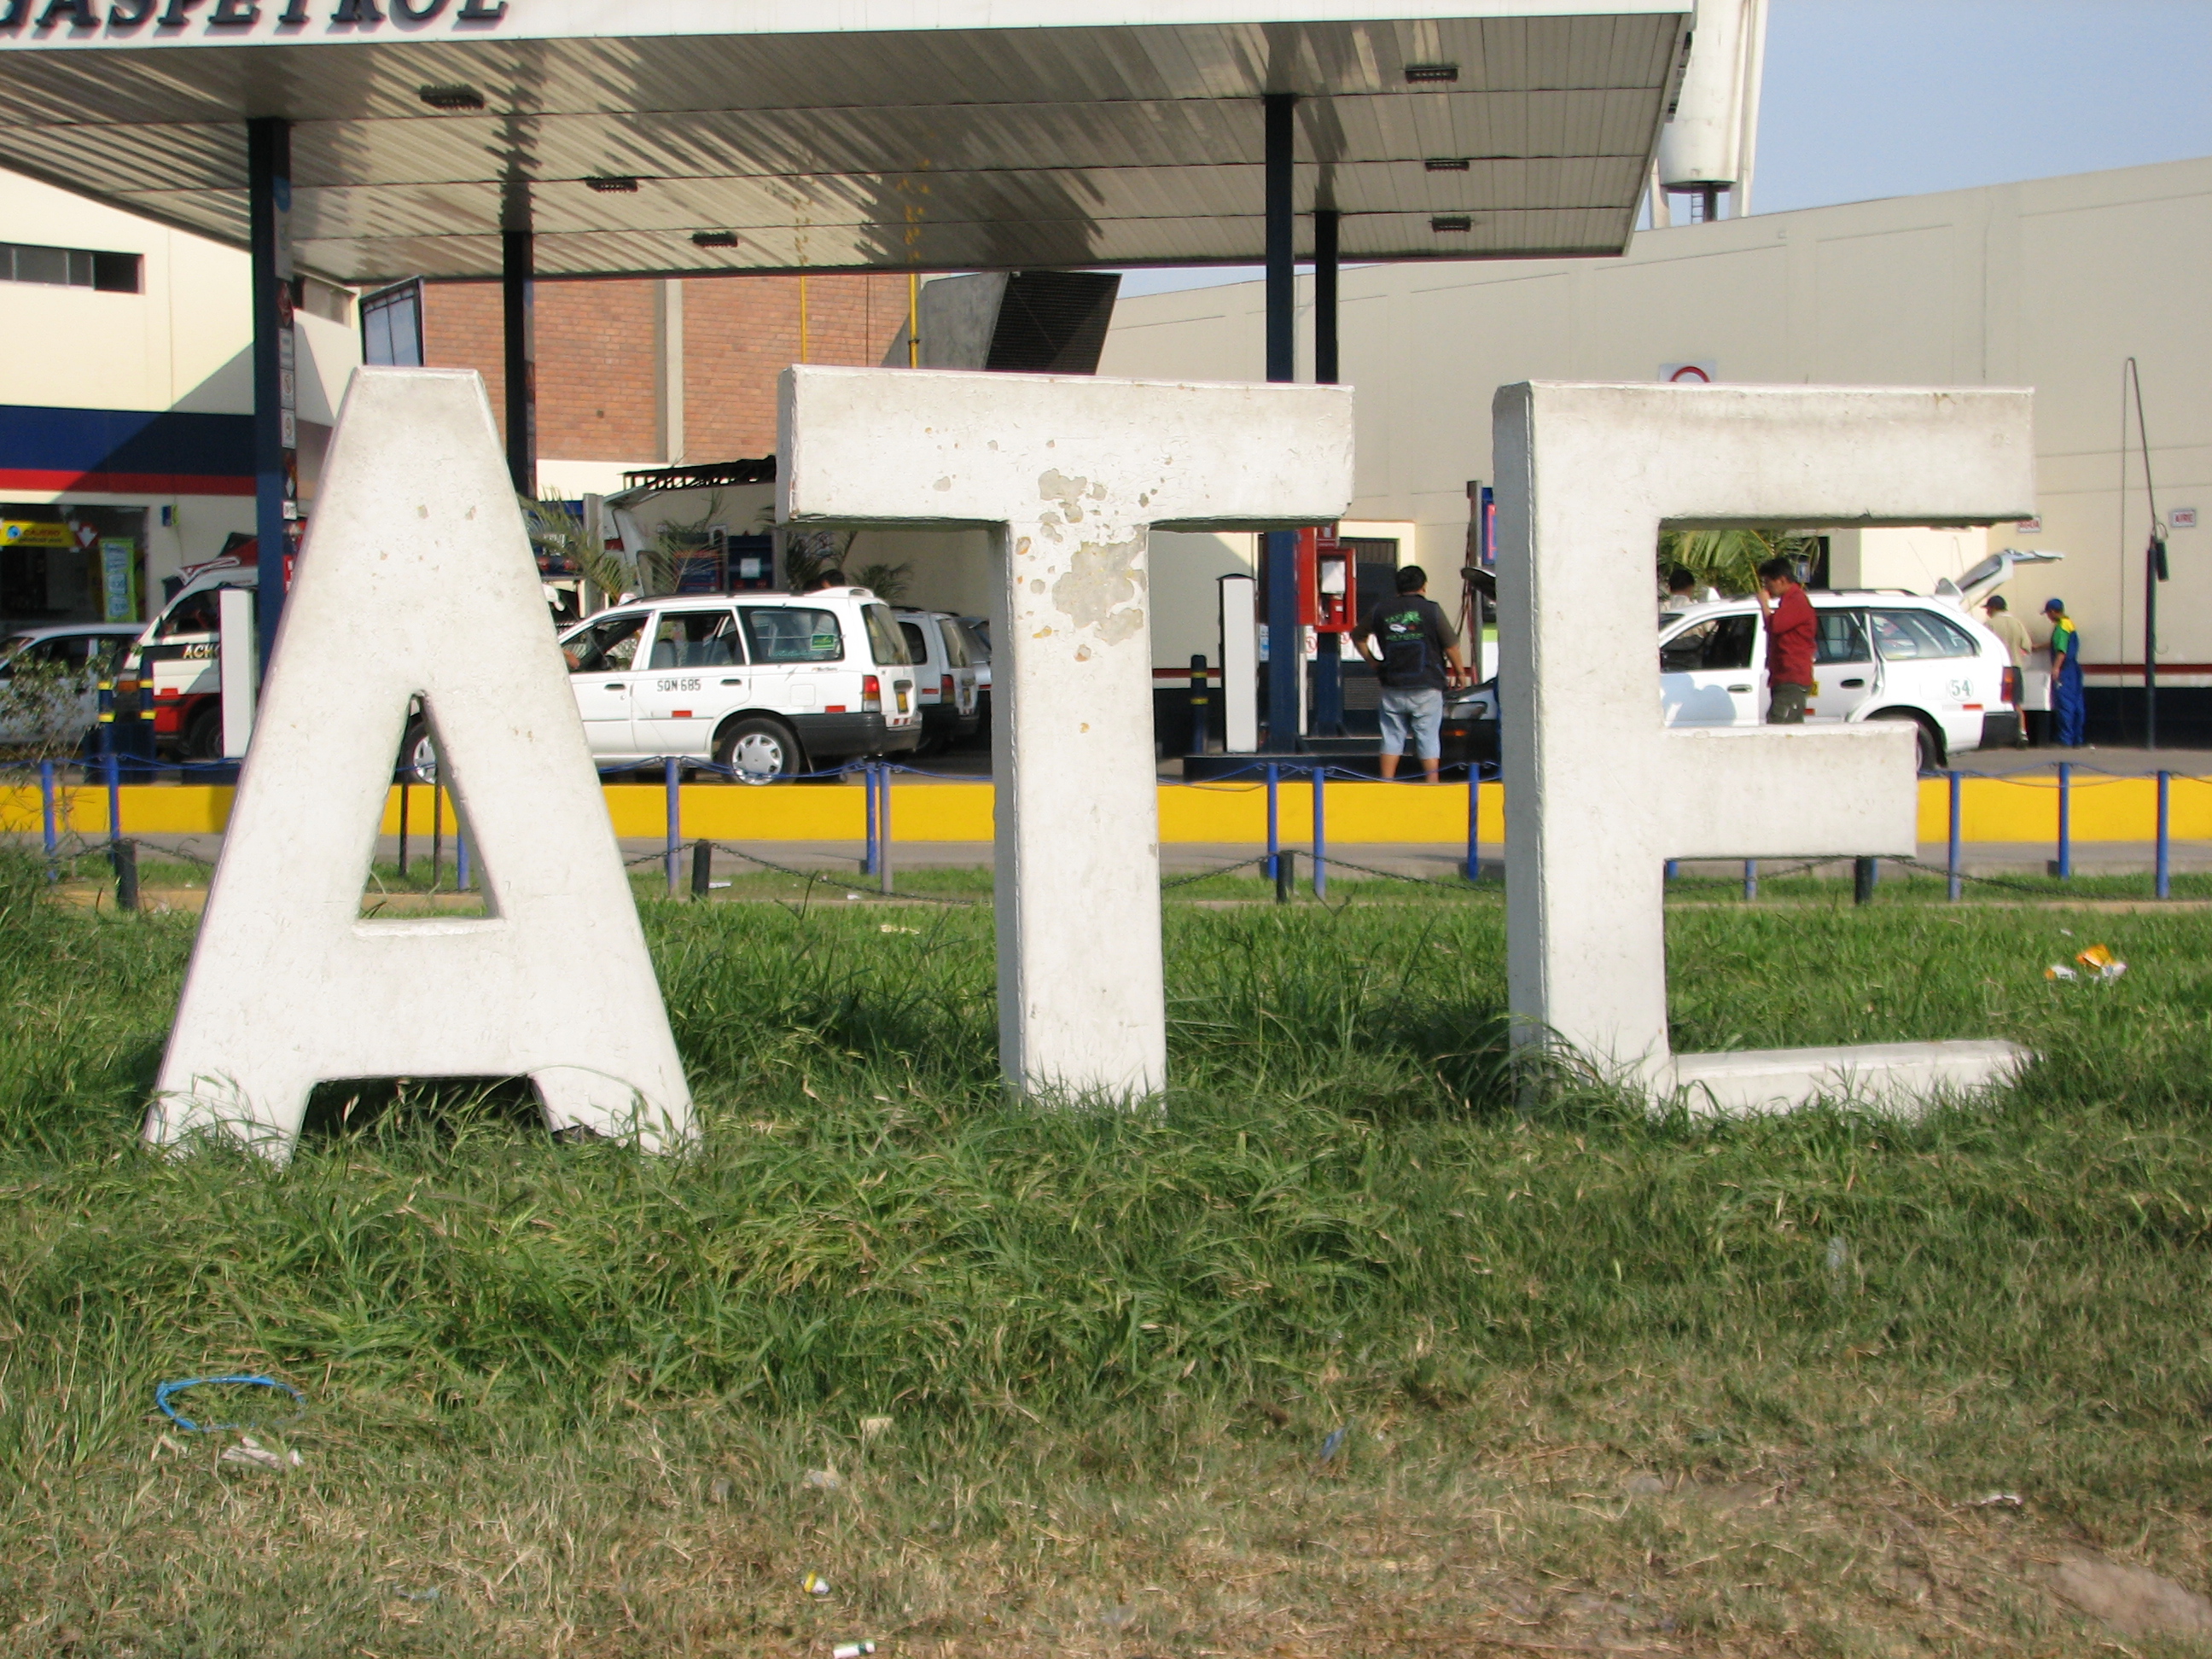 District_sign_Peru_Lima_Ate.jpg